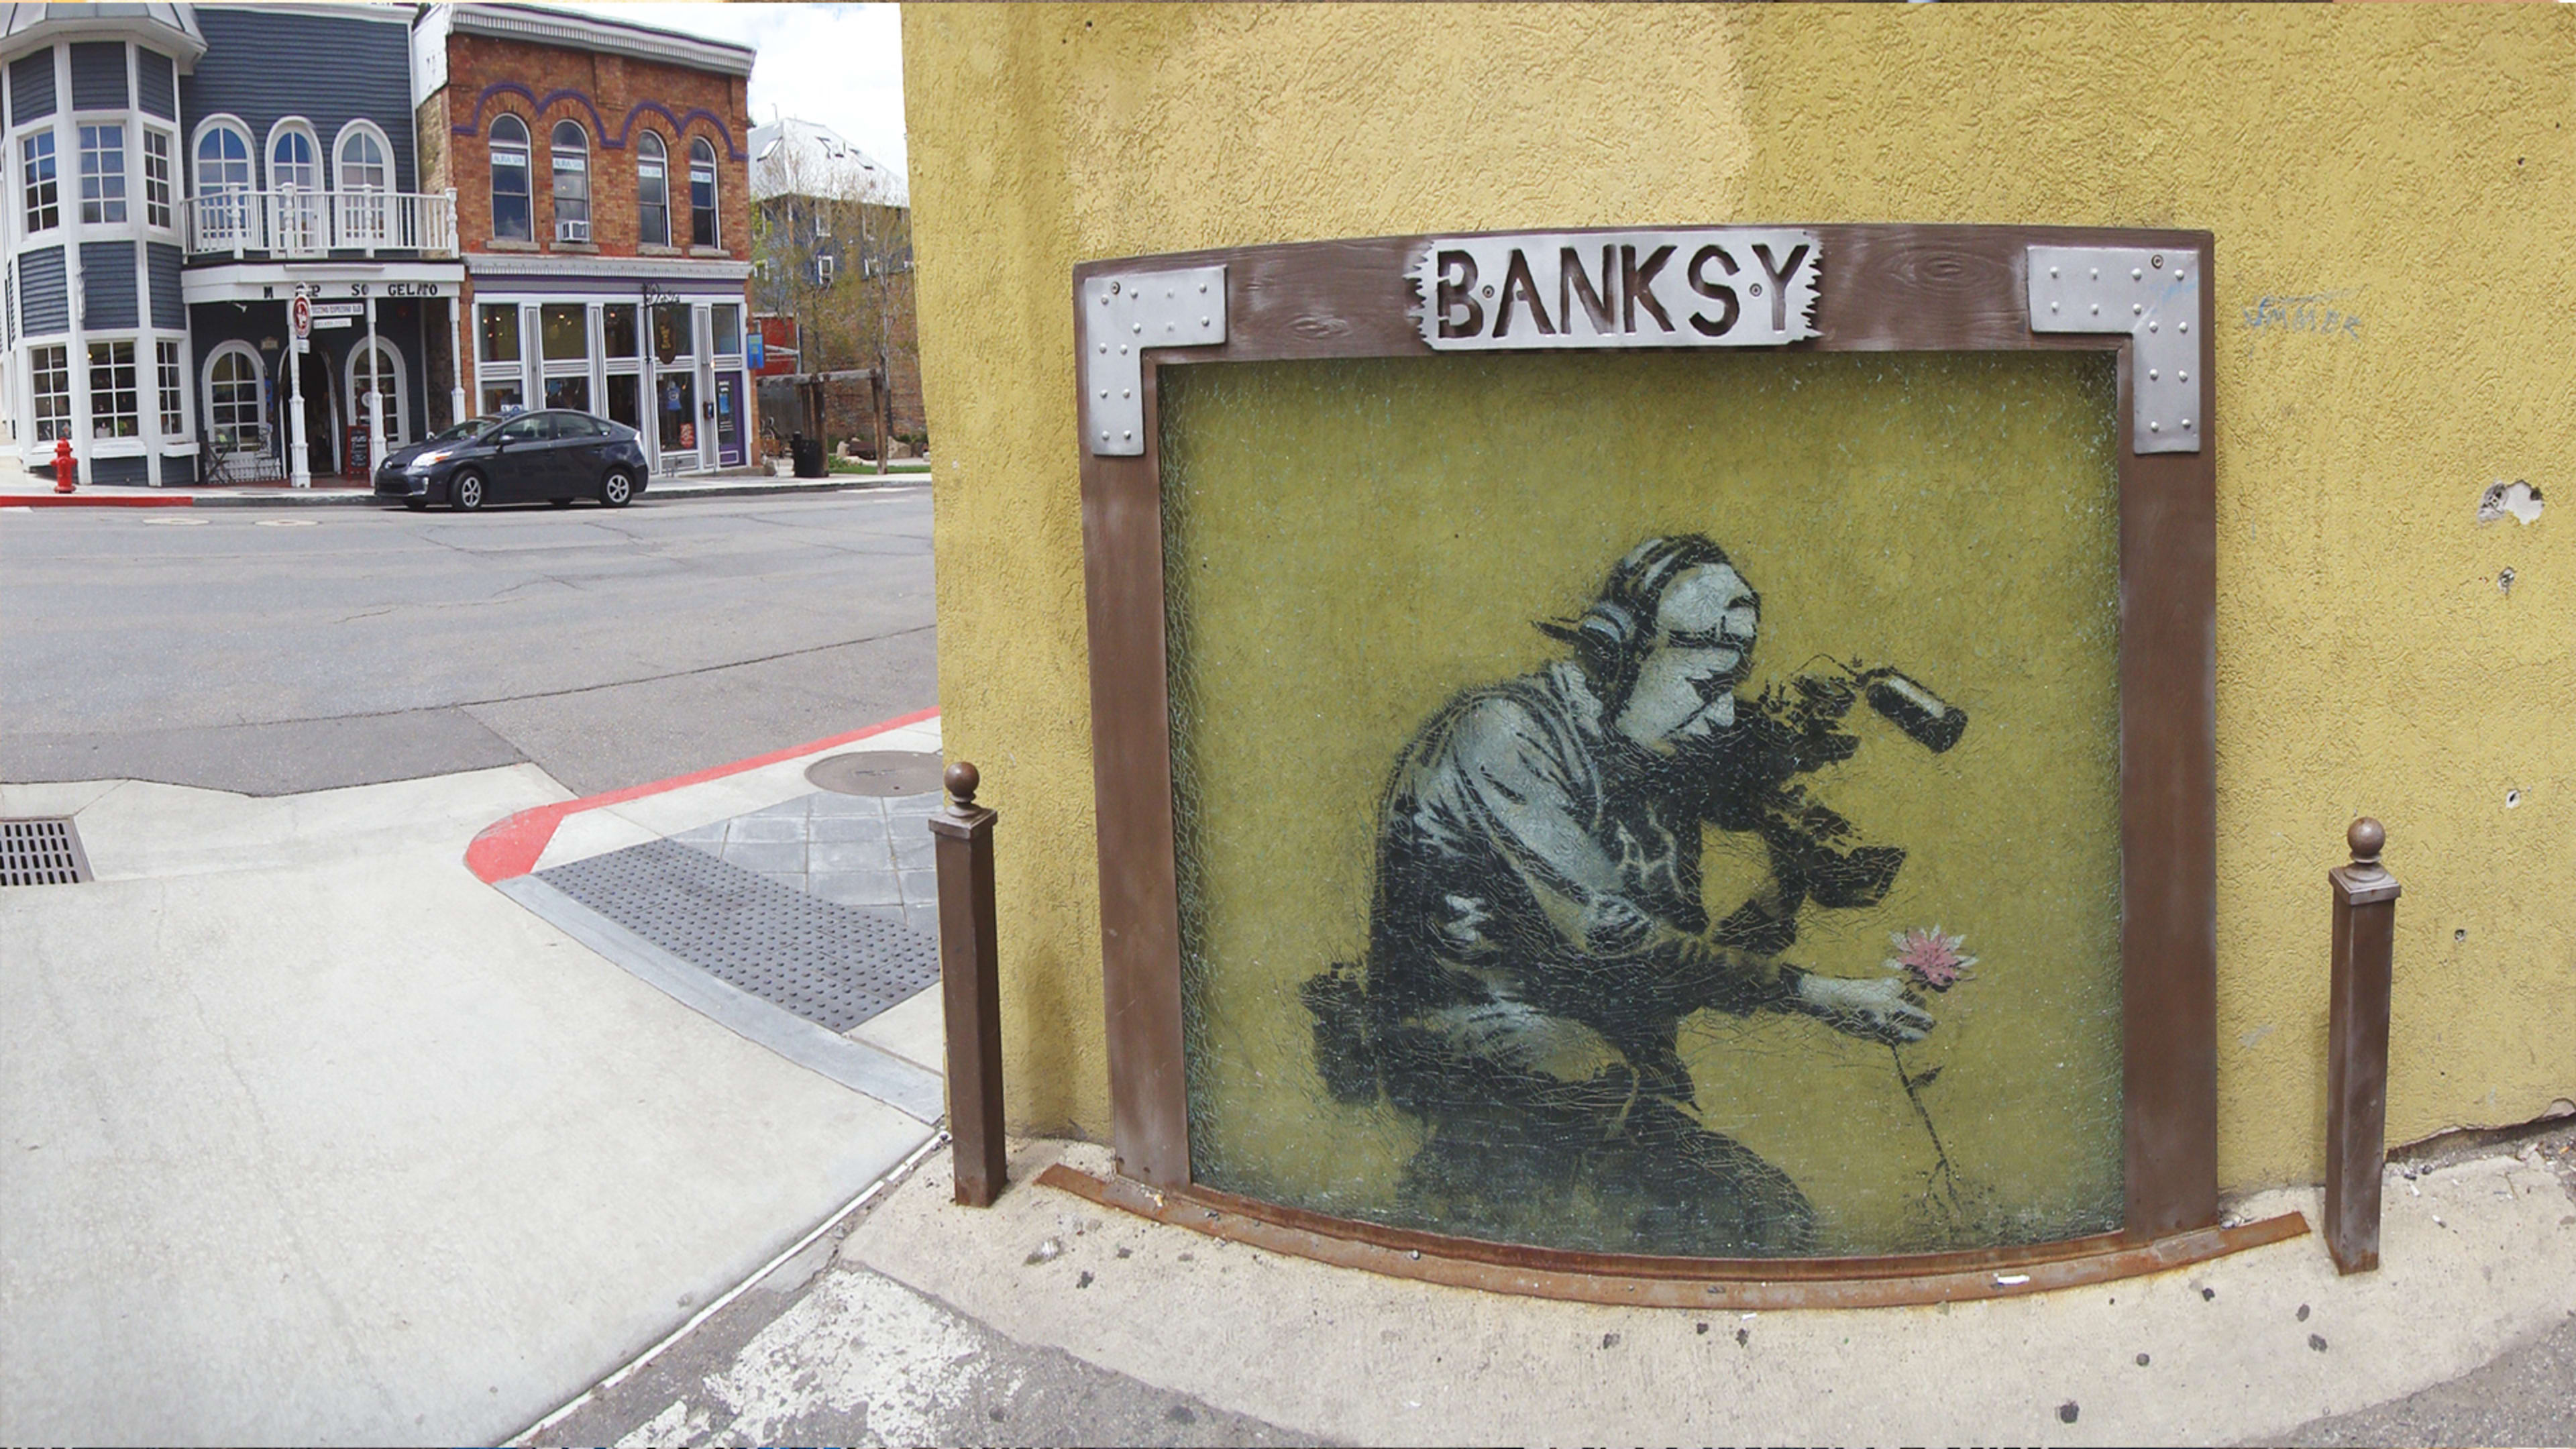 The fascinating legal conundrum facing Banksy